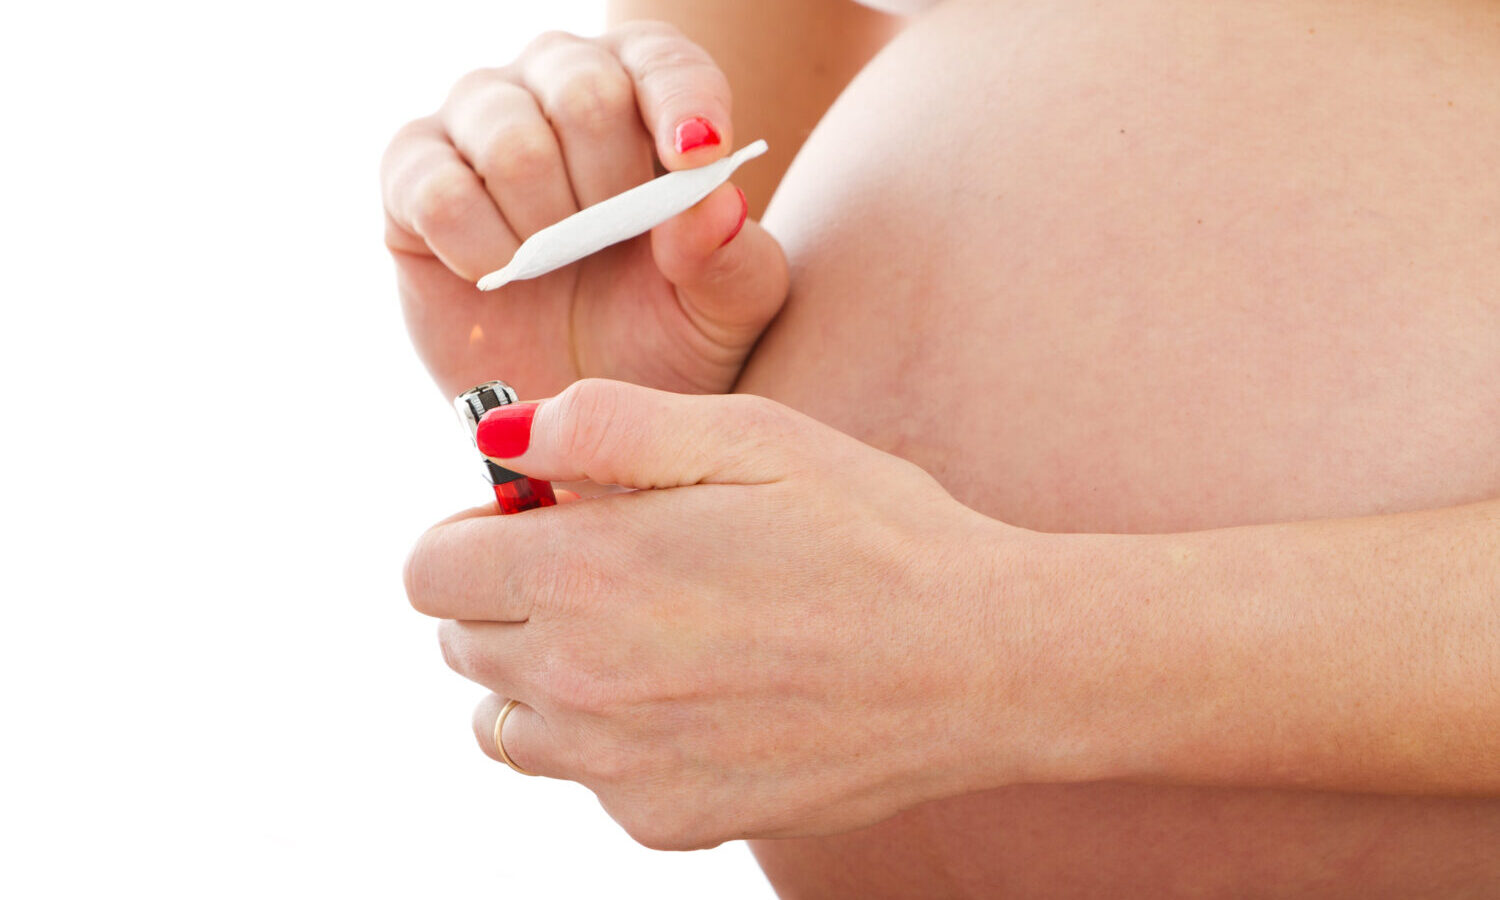 Oklahoma Suing Pregnant Women For Consuming Medical Marijuana